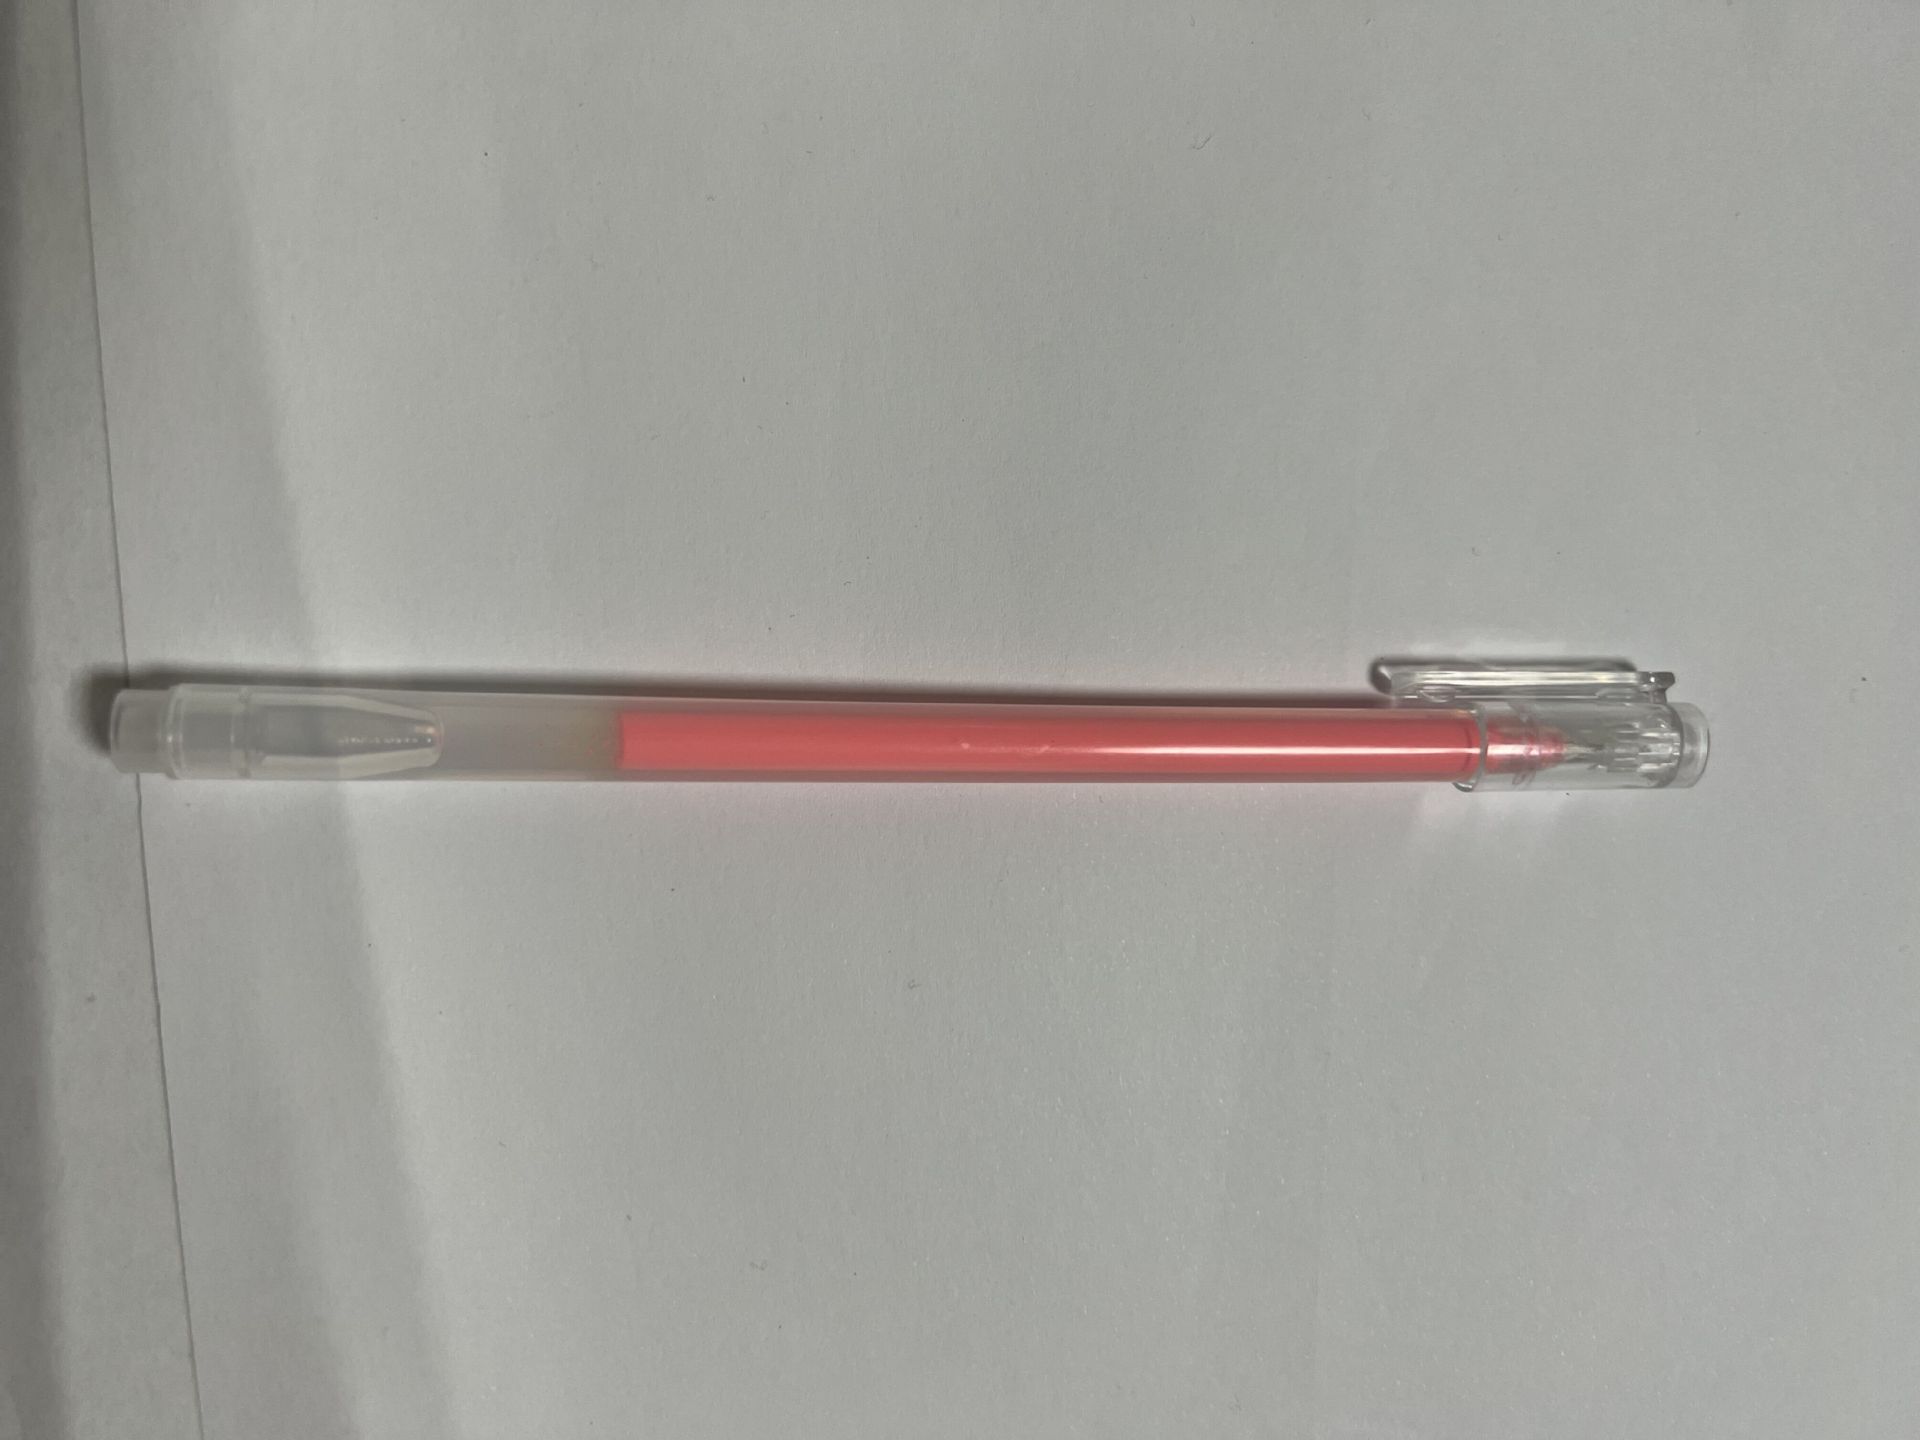 Bulk Factory Wholesale Highlight Color Hand Account Pen Graffiti Gel Pen 0.5mm Large Capacity Learning Office Pen